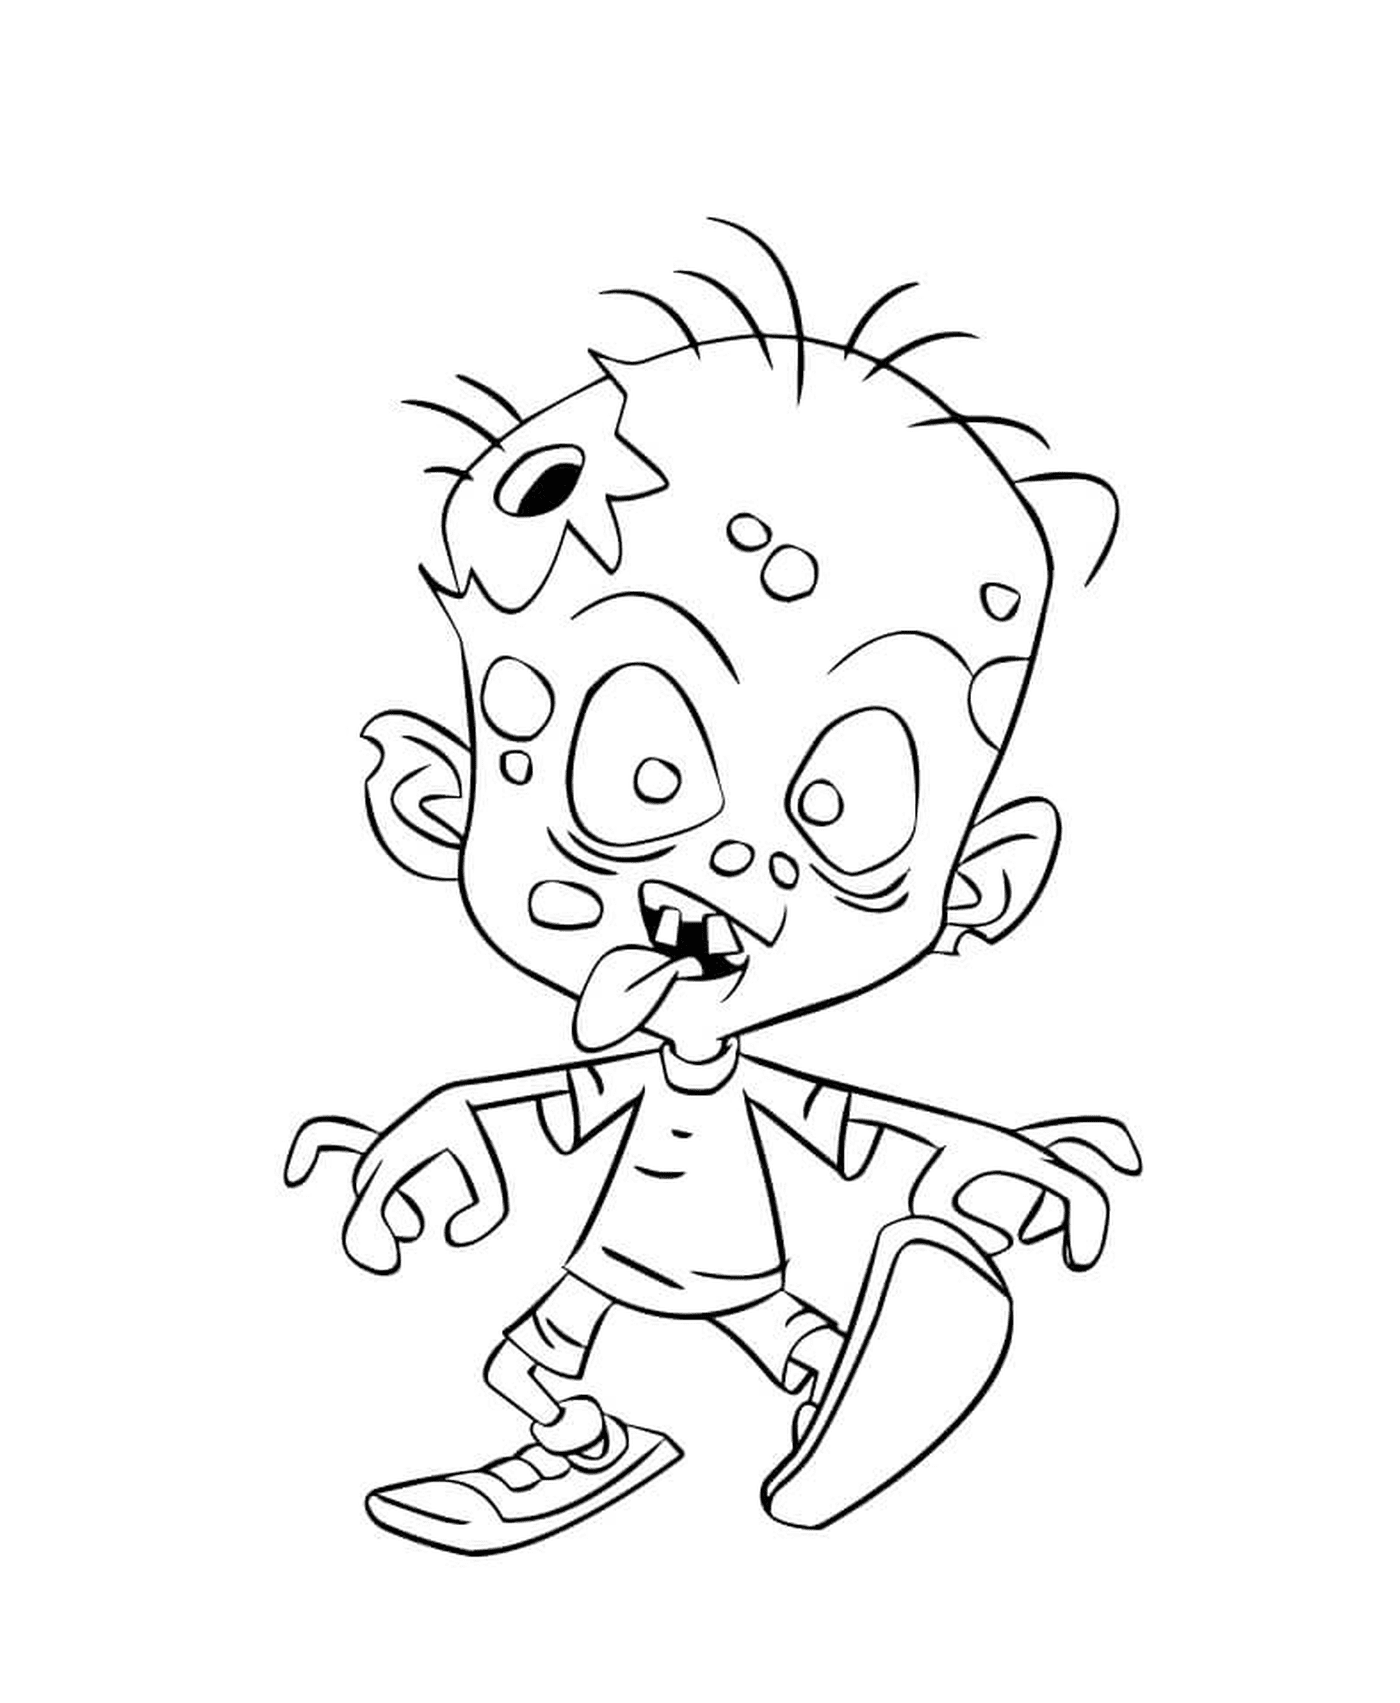  Ein Baby Zombie Kind 